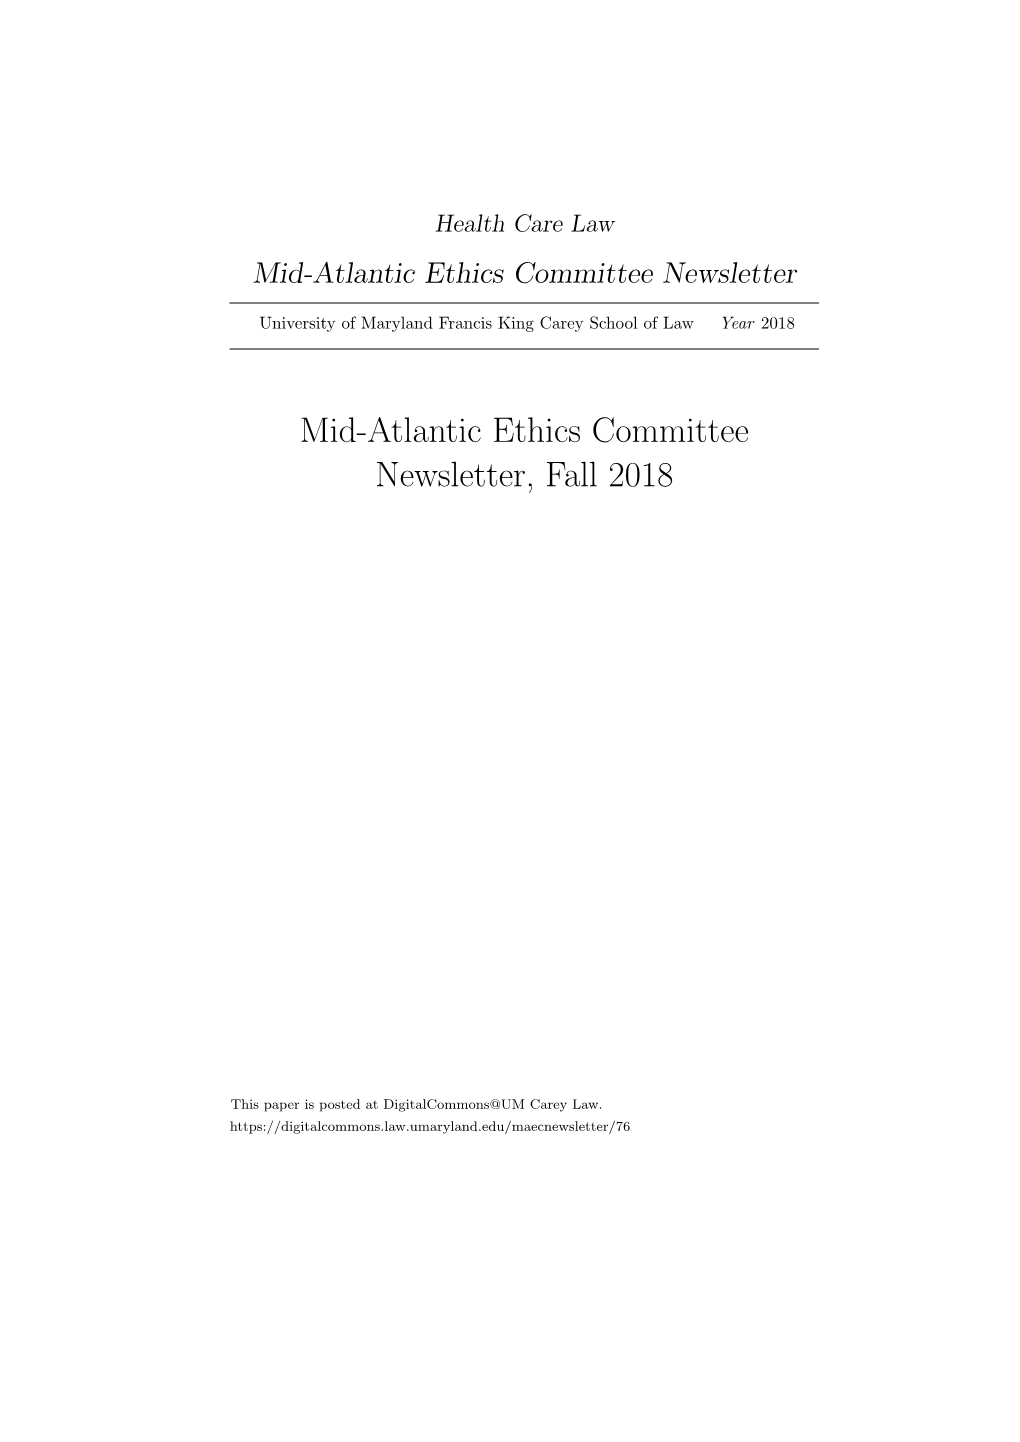 Mid-Atlantic Ethics Committee Newsletter, Fall 2018